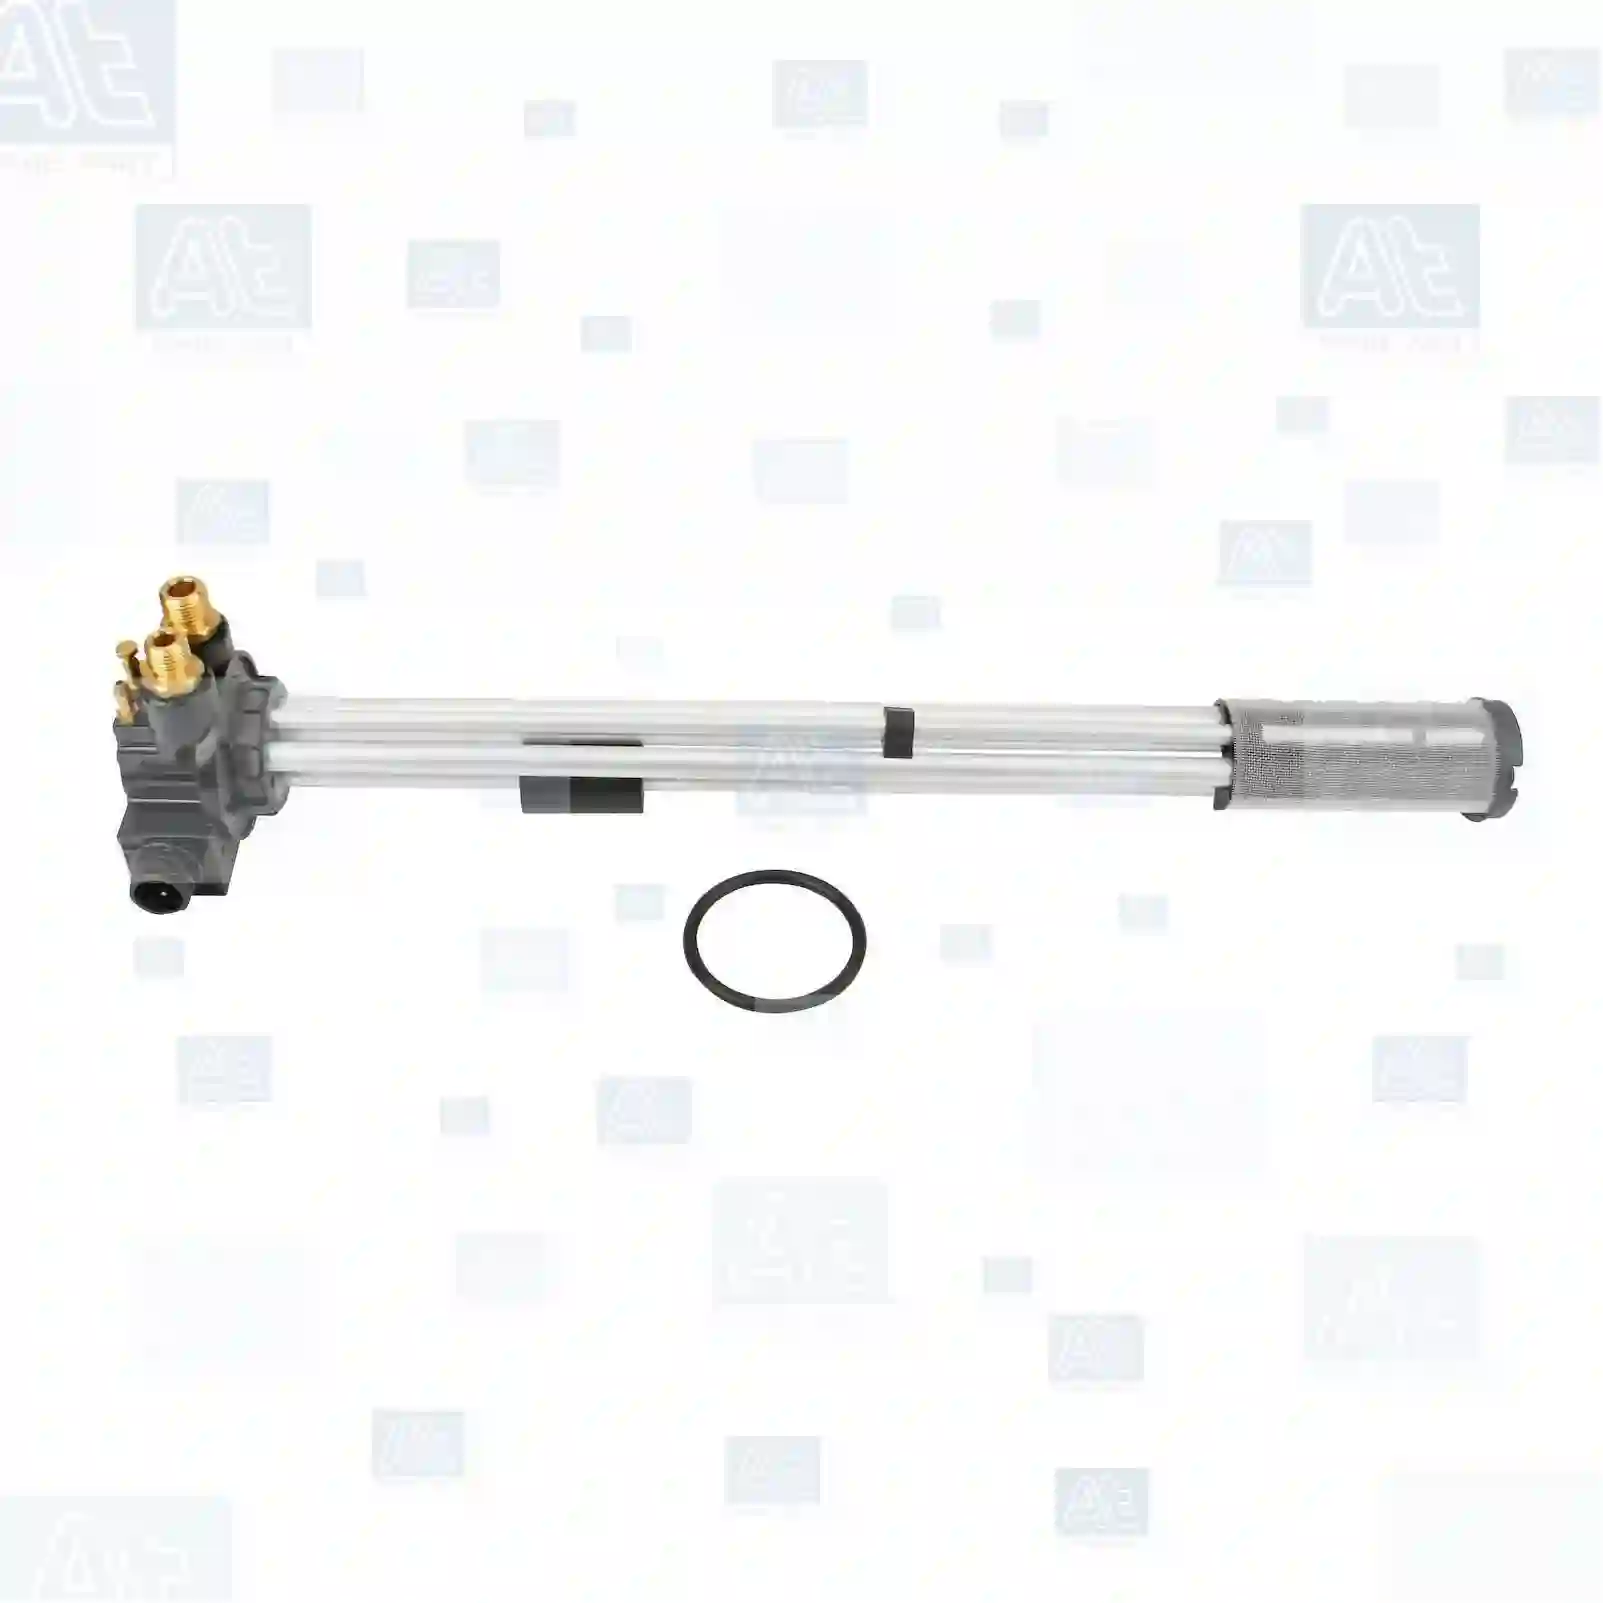 Fuel Gauge Sender Fuel level sensor, at no: 77723693 ,  oem no:1078994, 1078996, 1089333, 20375005, 20375007, 3943107, 3943109, 3962662, 3962664, 8155859, 8157003 At Spare Part | Engine, Accelerator Pedal, Camshaft, Connecting Rod, Crankcase, Crankshaft, Cylinder Head, Engine Suspension Mountings, Exhaust Manifold, Exhaust Gas Recirculation, Filter Kits, Flywheel Housing, General Overhaul Kits, Engine, Intake Manifold, Oil Cleaner, Oil Cooler, Oil Filter, Oil Pump, Oil Sump, Piston & Liner, Sensor & Switch, Timing Case, Turbocharger, Cooling System, Belt Tensioner, Coolant Filter, Coolant Pipe, Corrosion Prevention Agent, Drive, Expansion Tank, Fan, Intercooler, Monitors & Gauges, Radiator, Thermostat, V-Belt / Timing belt, Water Pump, Fuel System, Electronical Injector Unit, Feed Pump, Fuel Filter, cpl., Fuel Gauge Sender,  Fuel Line, Fuel Pump, Fuel Tank, Injection Line Kit, Injection Pump, Exhaust System, Clutch & Pedal, Gearbox, Propeller Shaft, Axles, Brake System, Hubs & Wheels, Suspension, Leaf Spring, Universal Parts / Accessories, Steering, Electrical System, Cabin